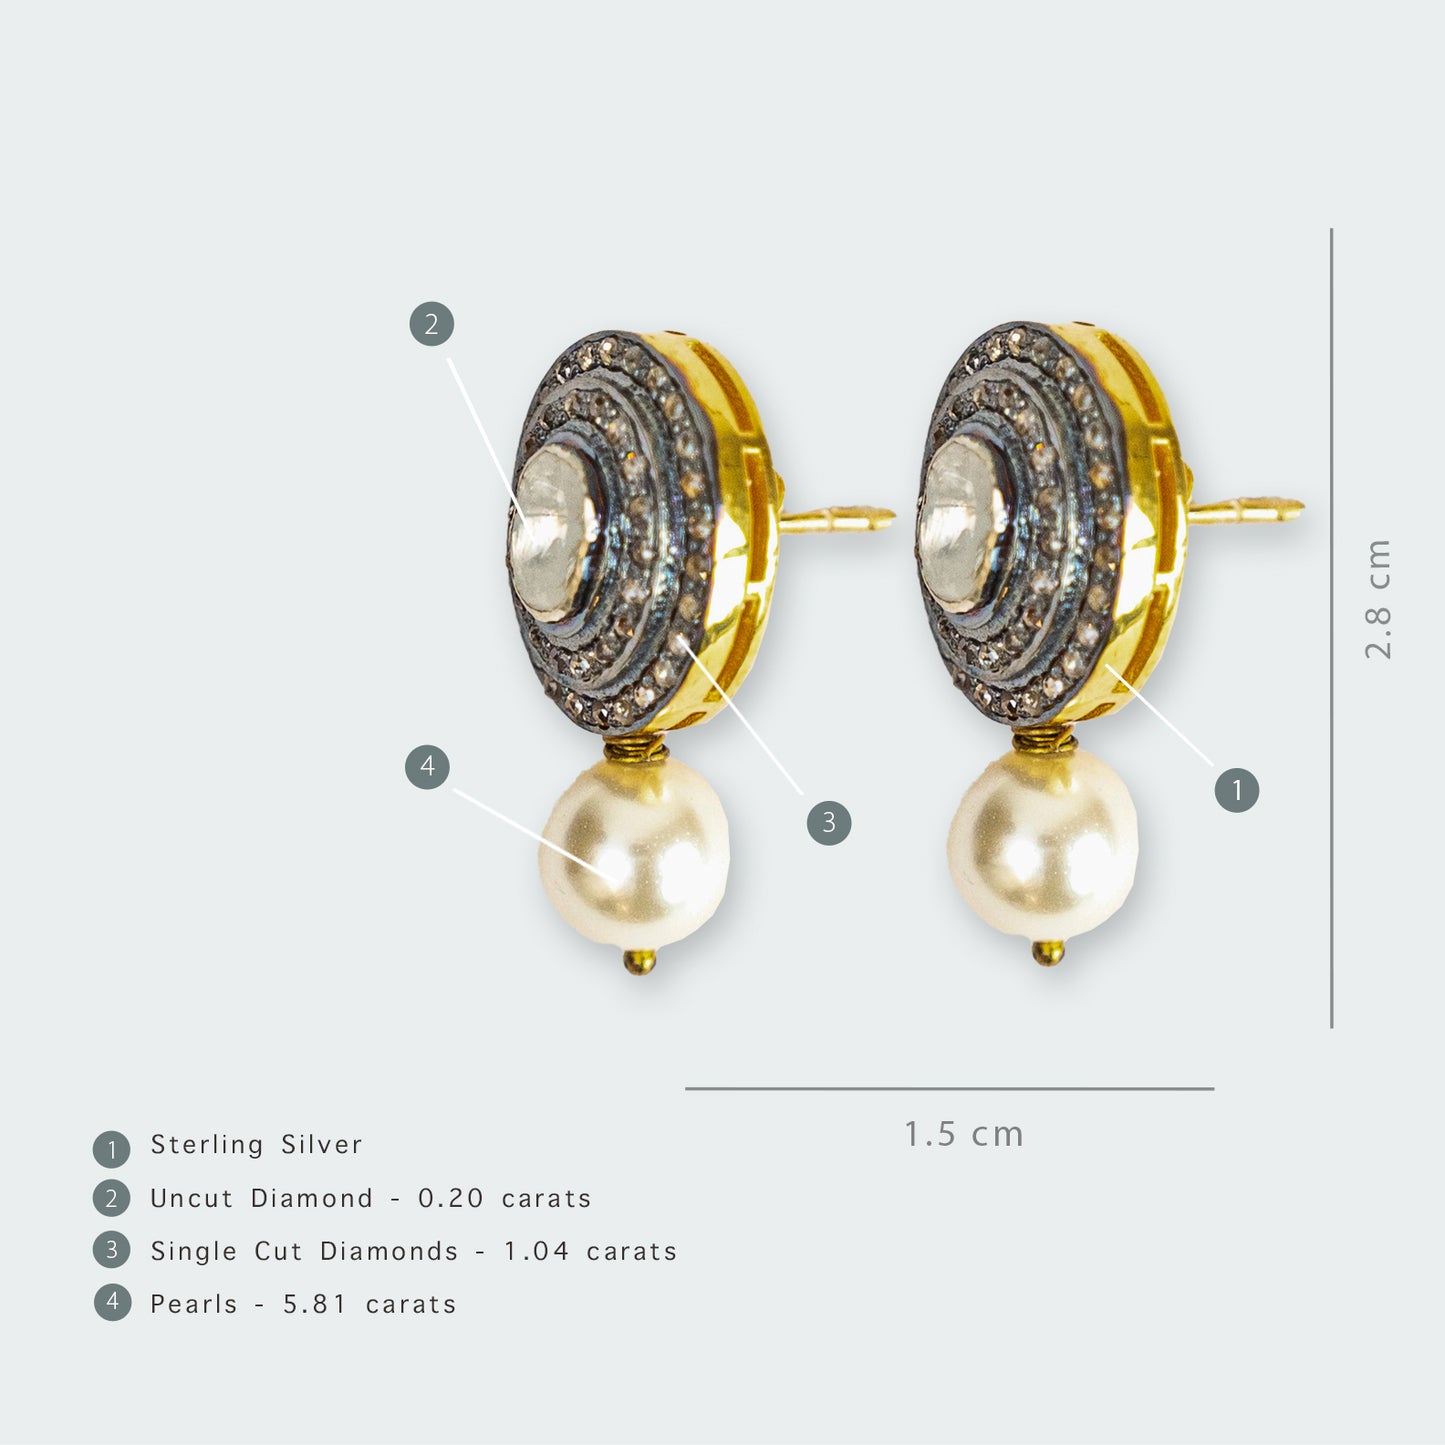 Dual Diamond Oval Uncut Diamond Earrings